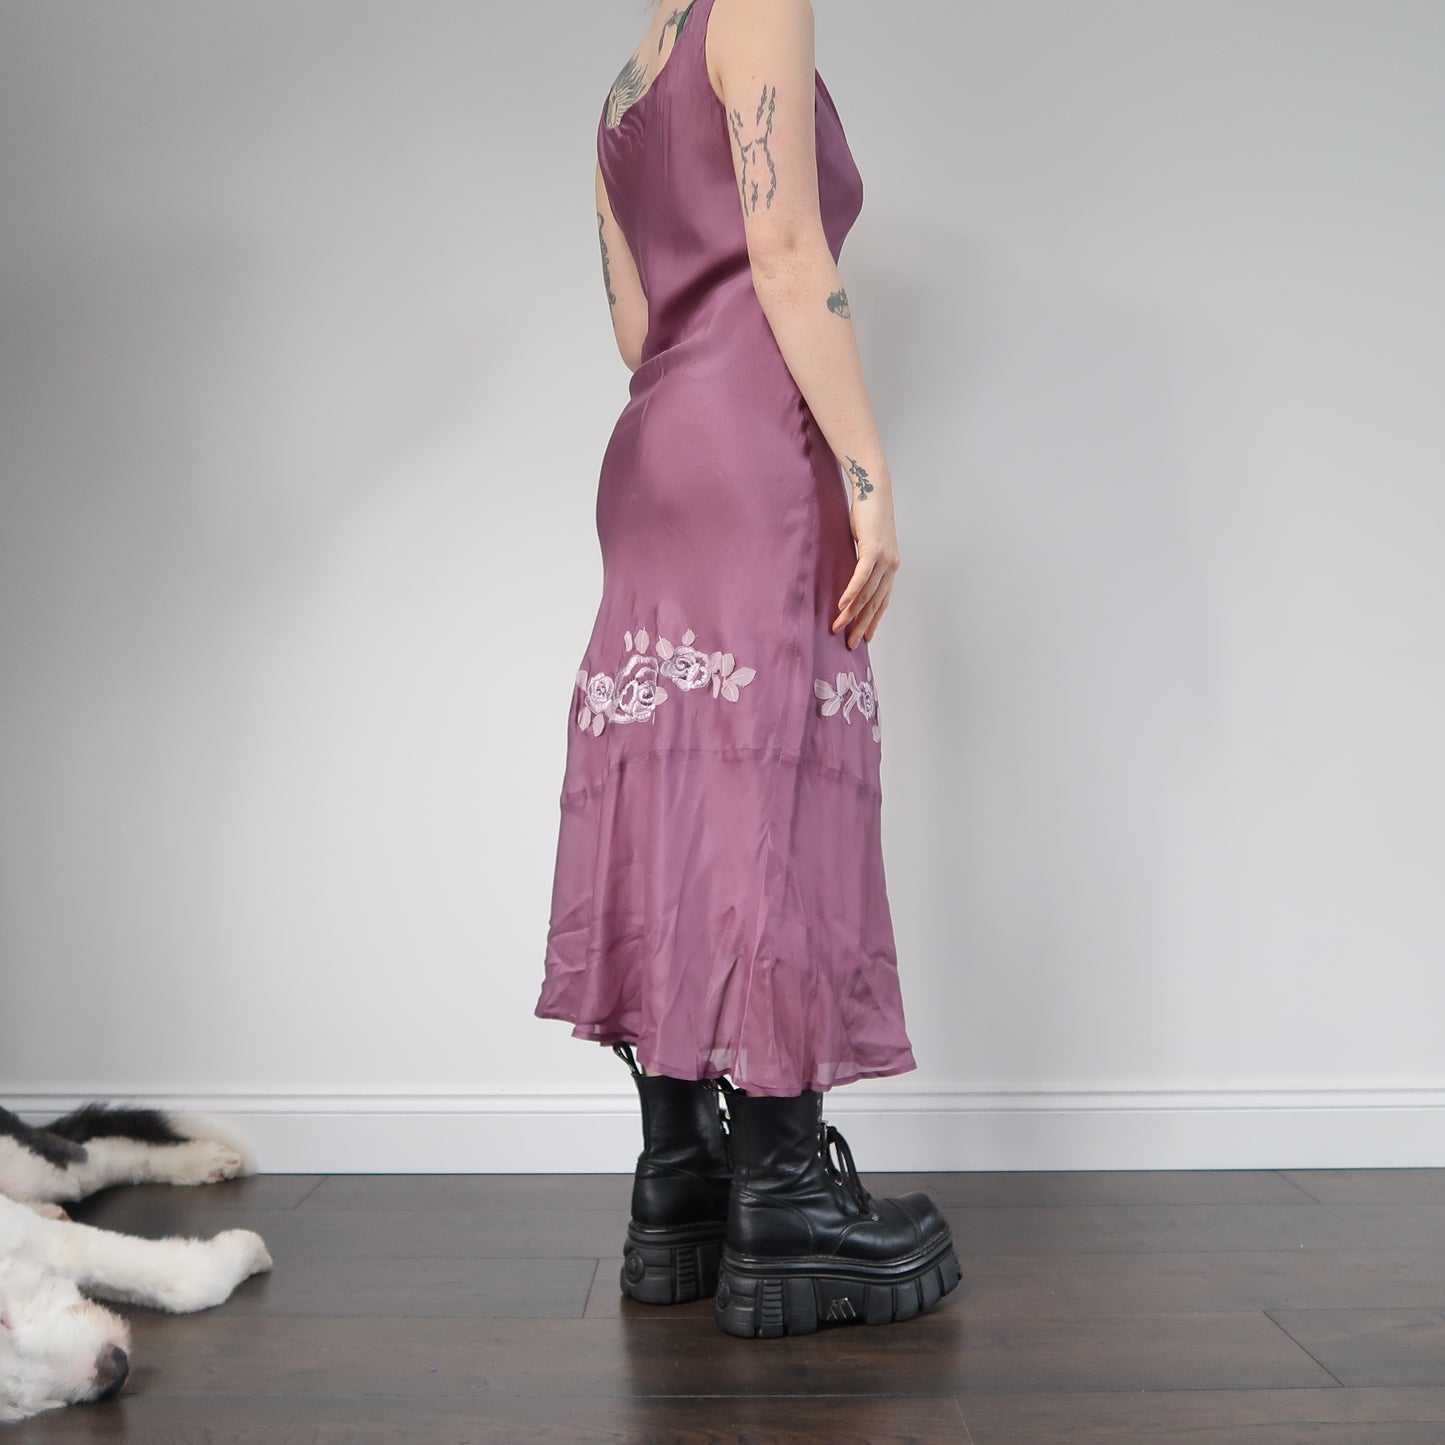 Purple dress - size 8/10